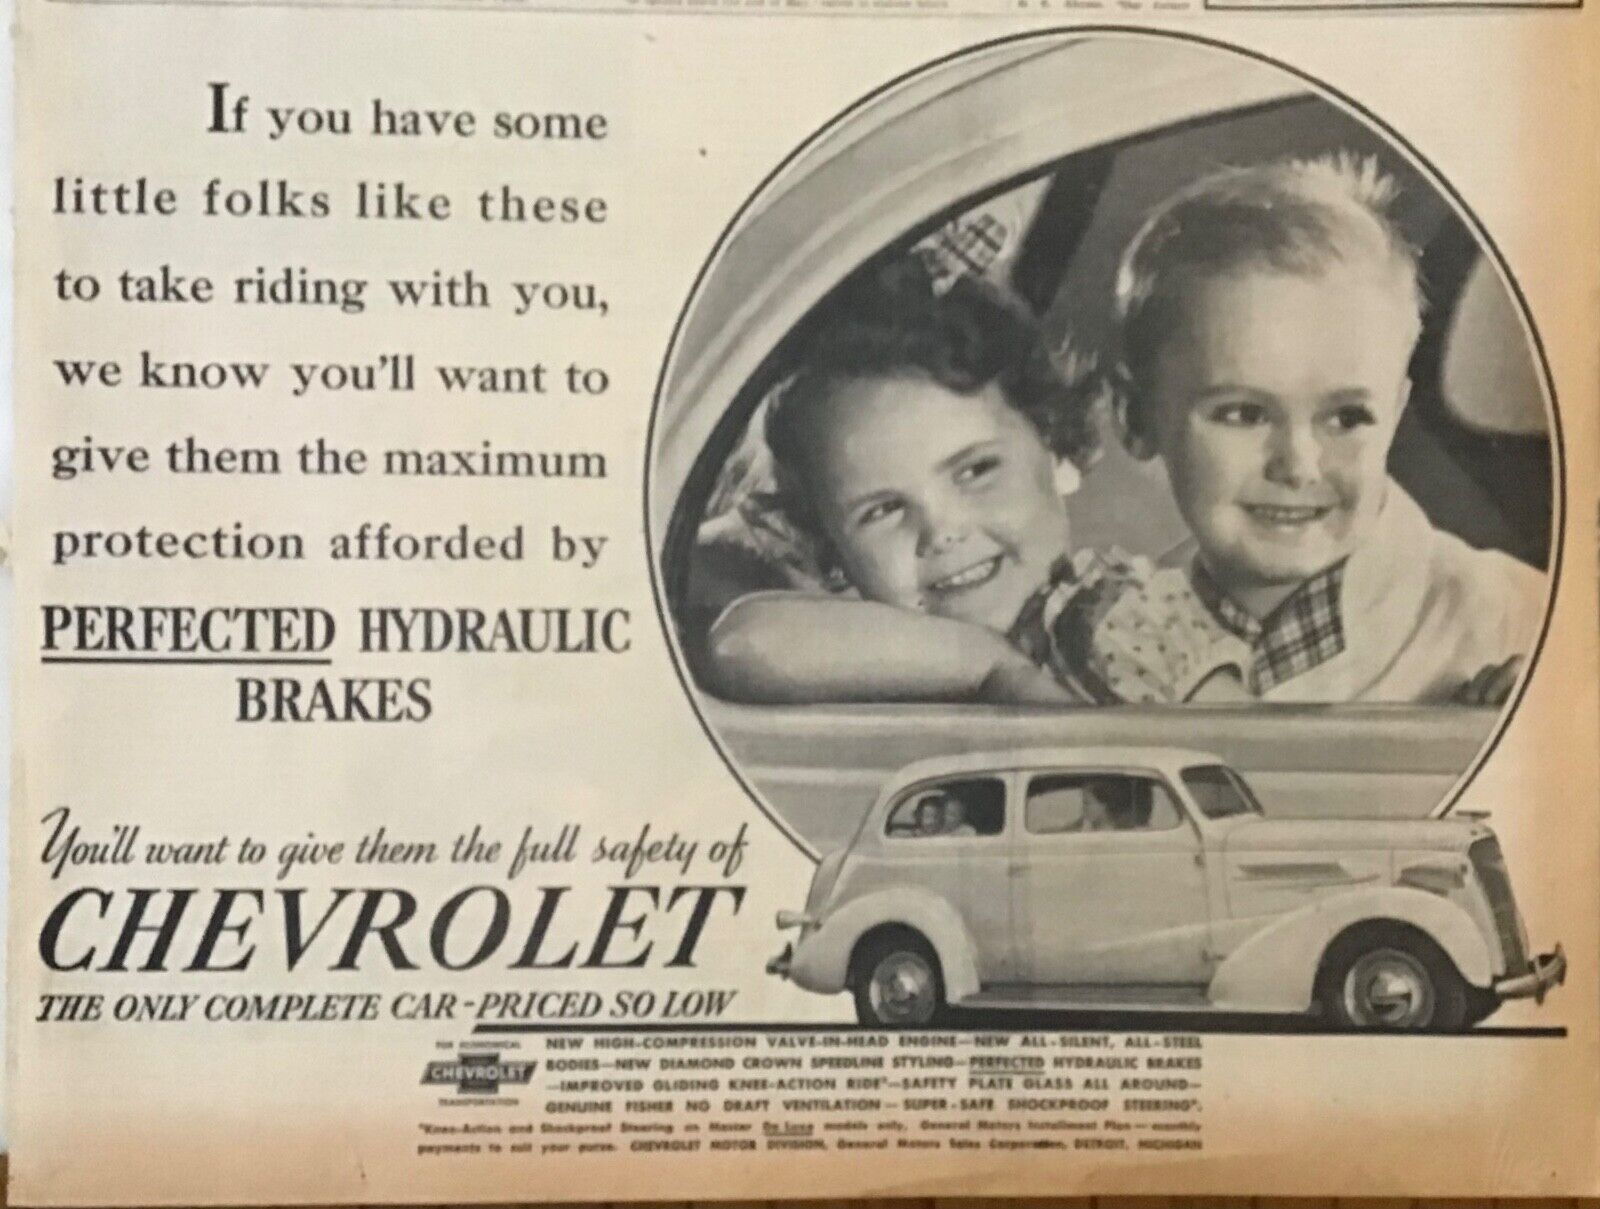 Large 1937 newspaper ad for Chevrolet -  Keep little folks safe, hydraulic brake